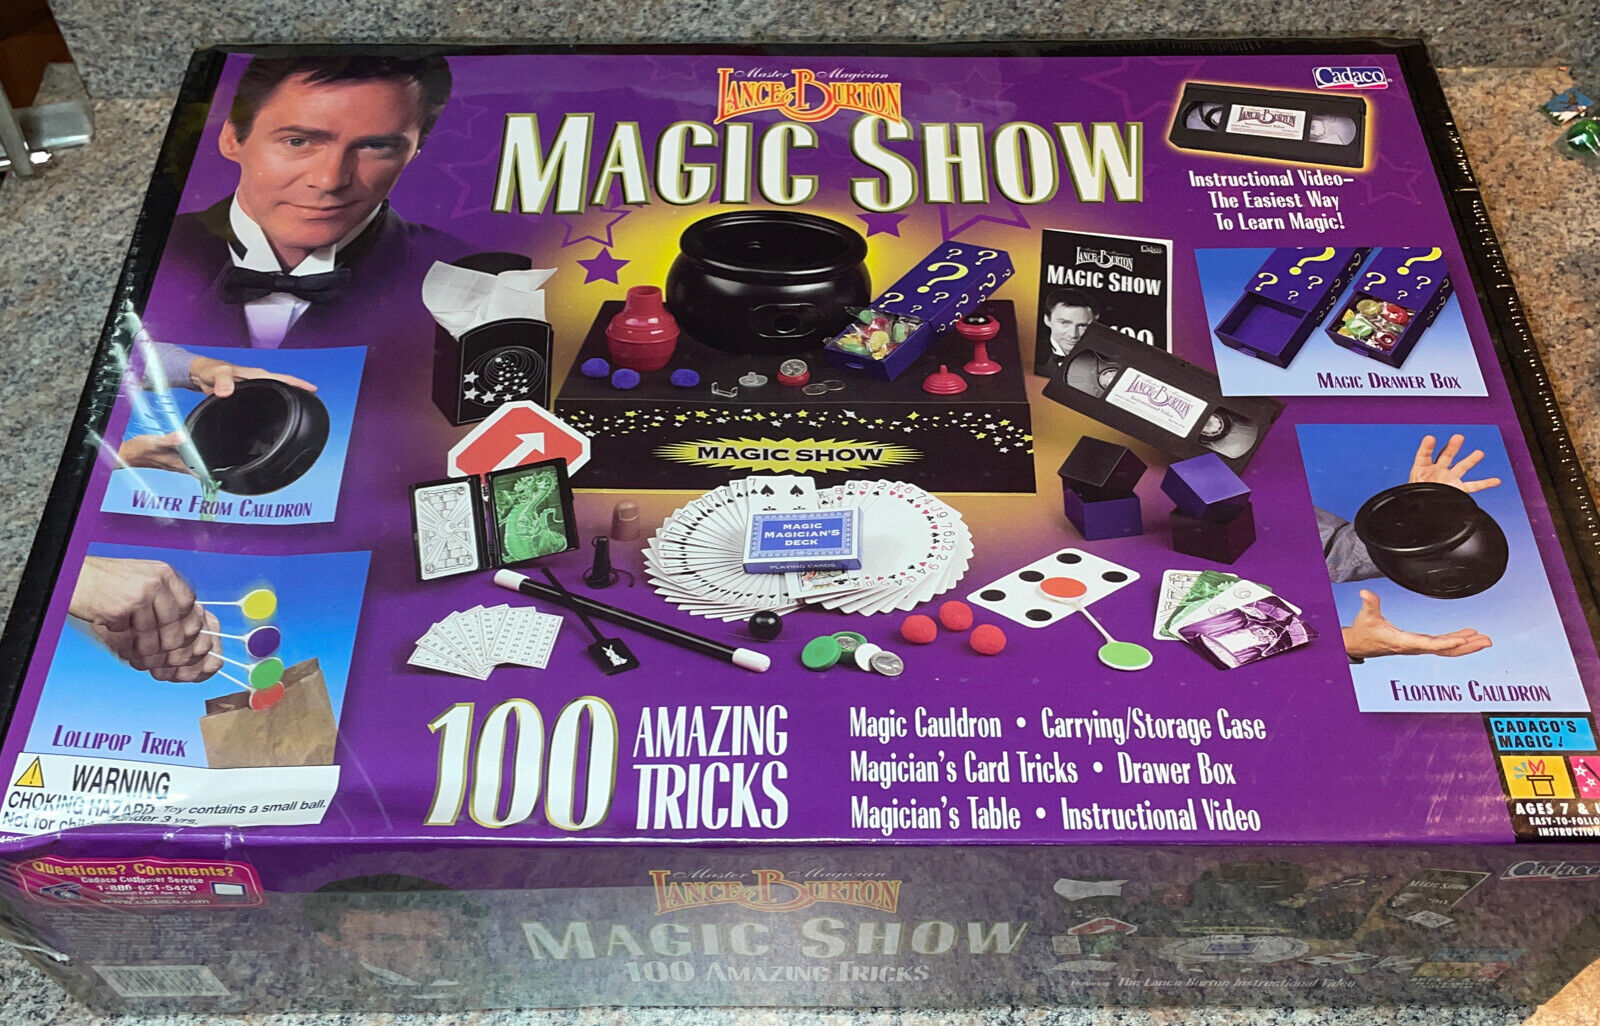 NEW 2002 CADACO LANCE BURTON MAGIC SHOW SET 100 AMAZING TRICKS SEALED VHS